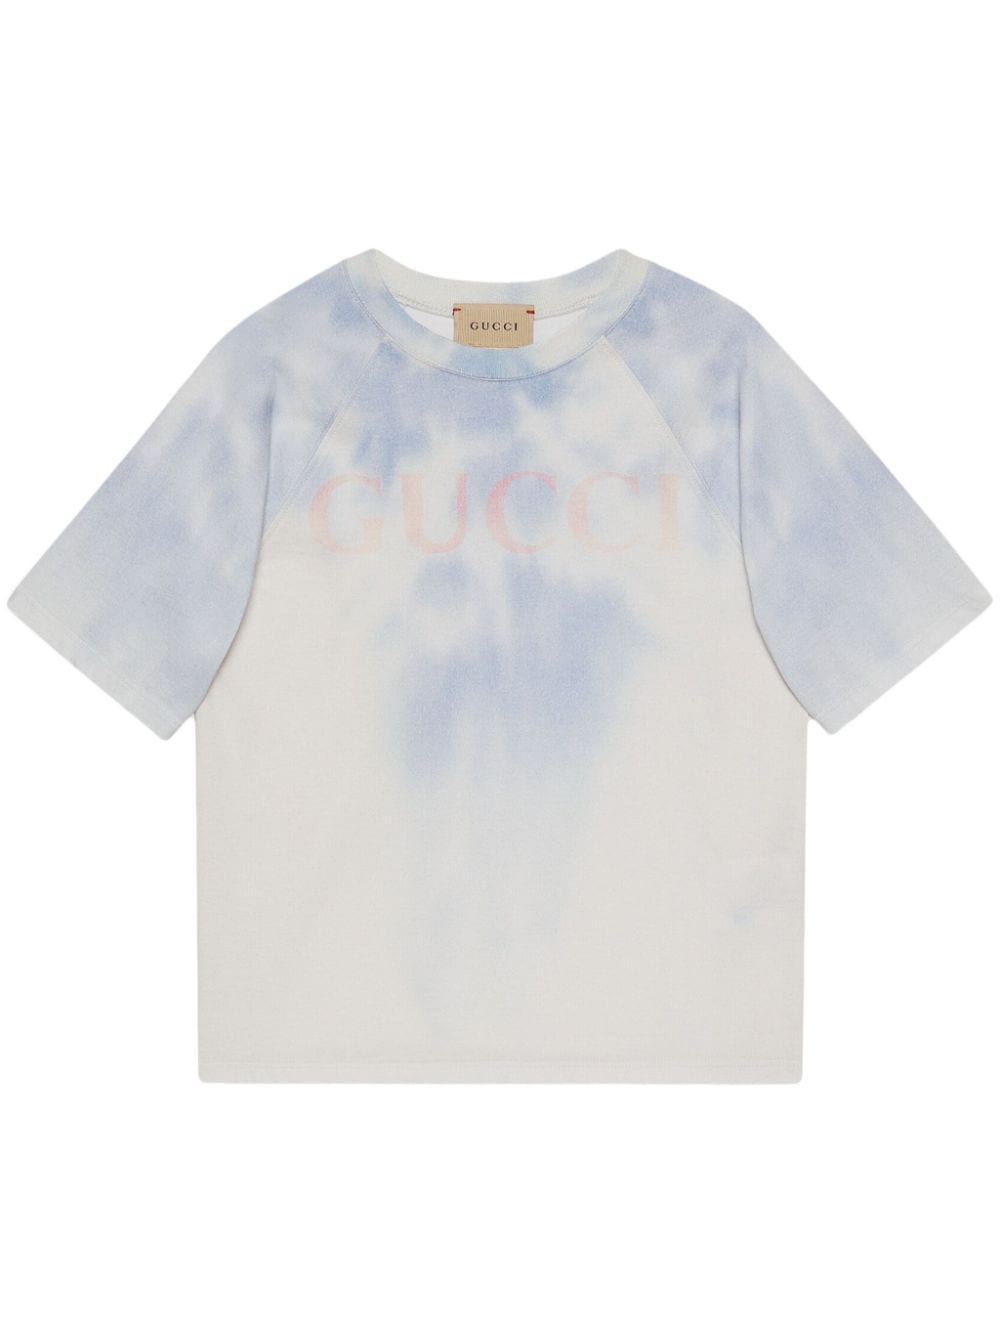 Gucci Kids T-shirt con fantasia tie dye - Bianco